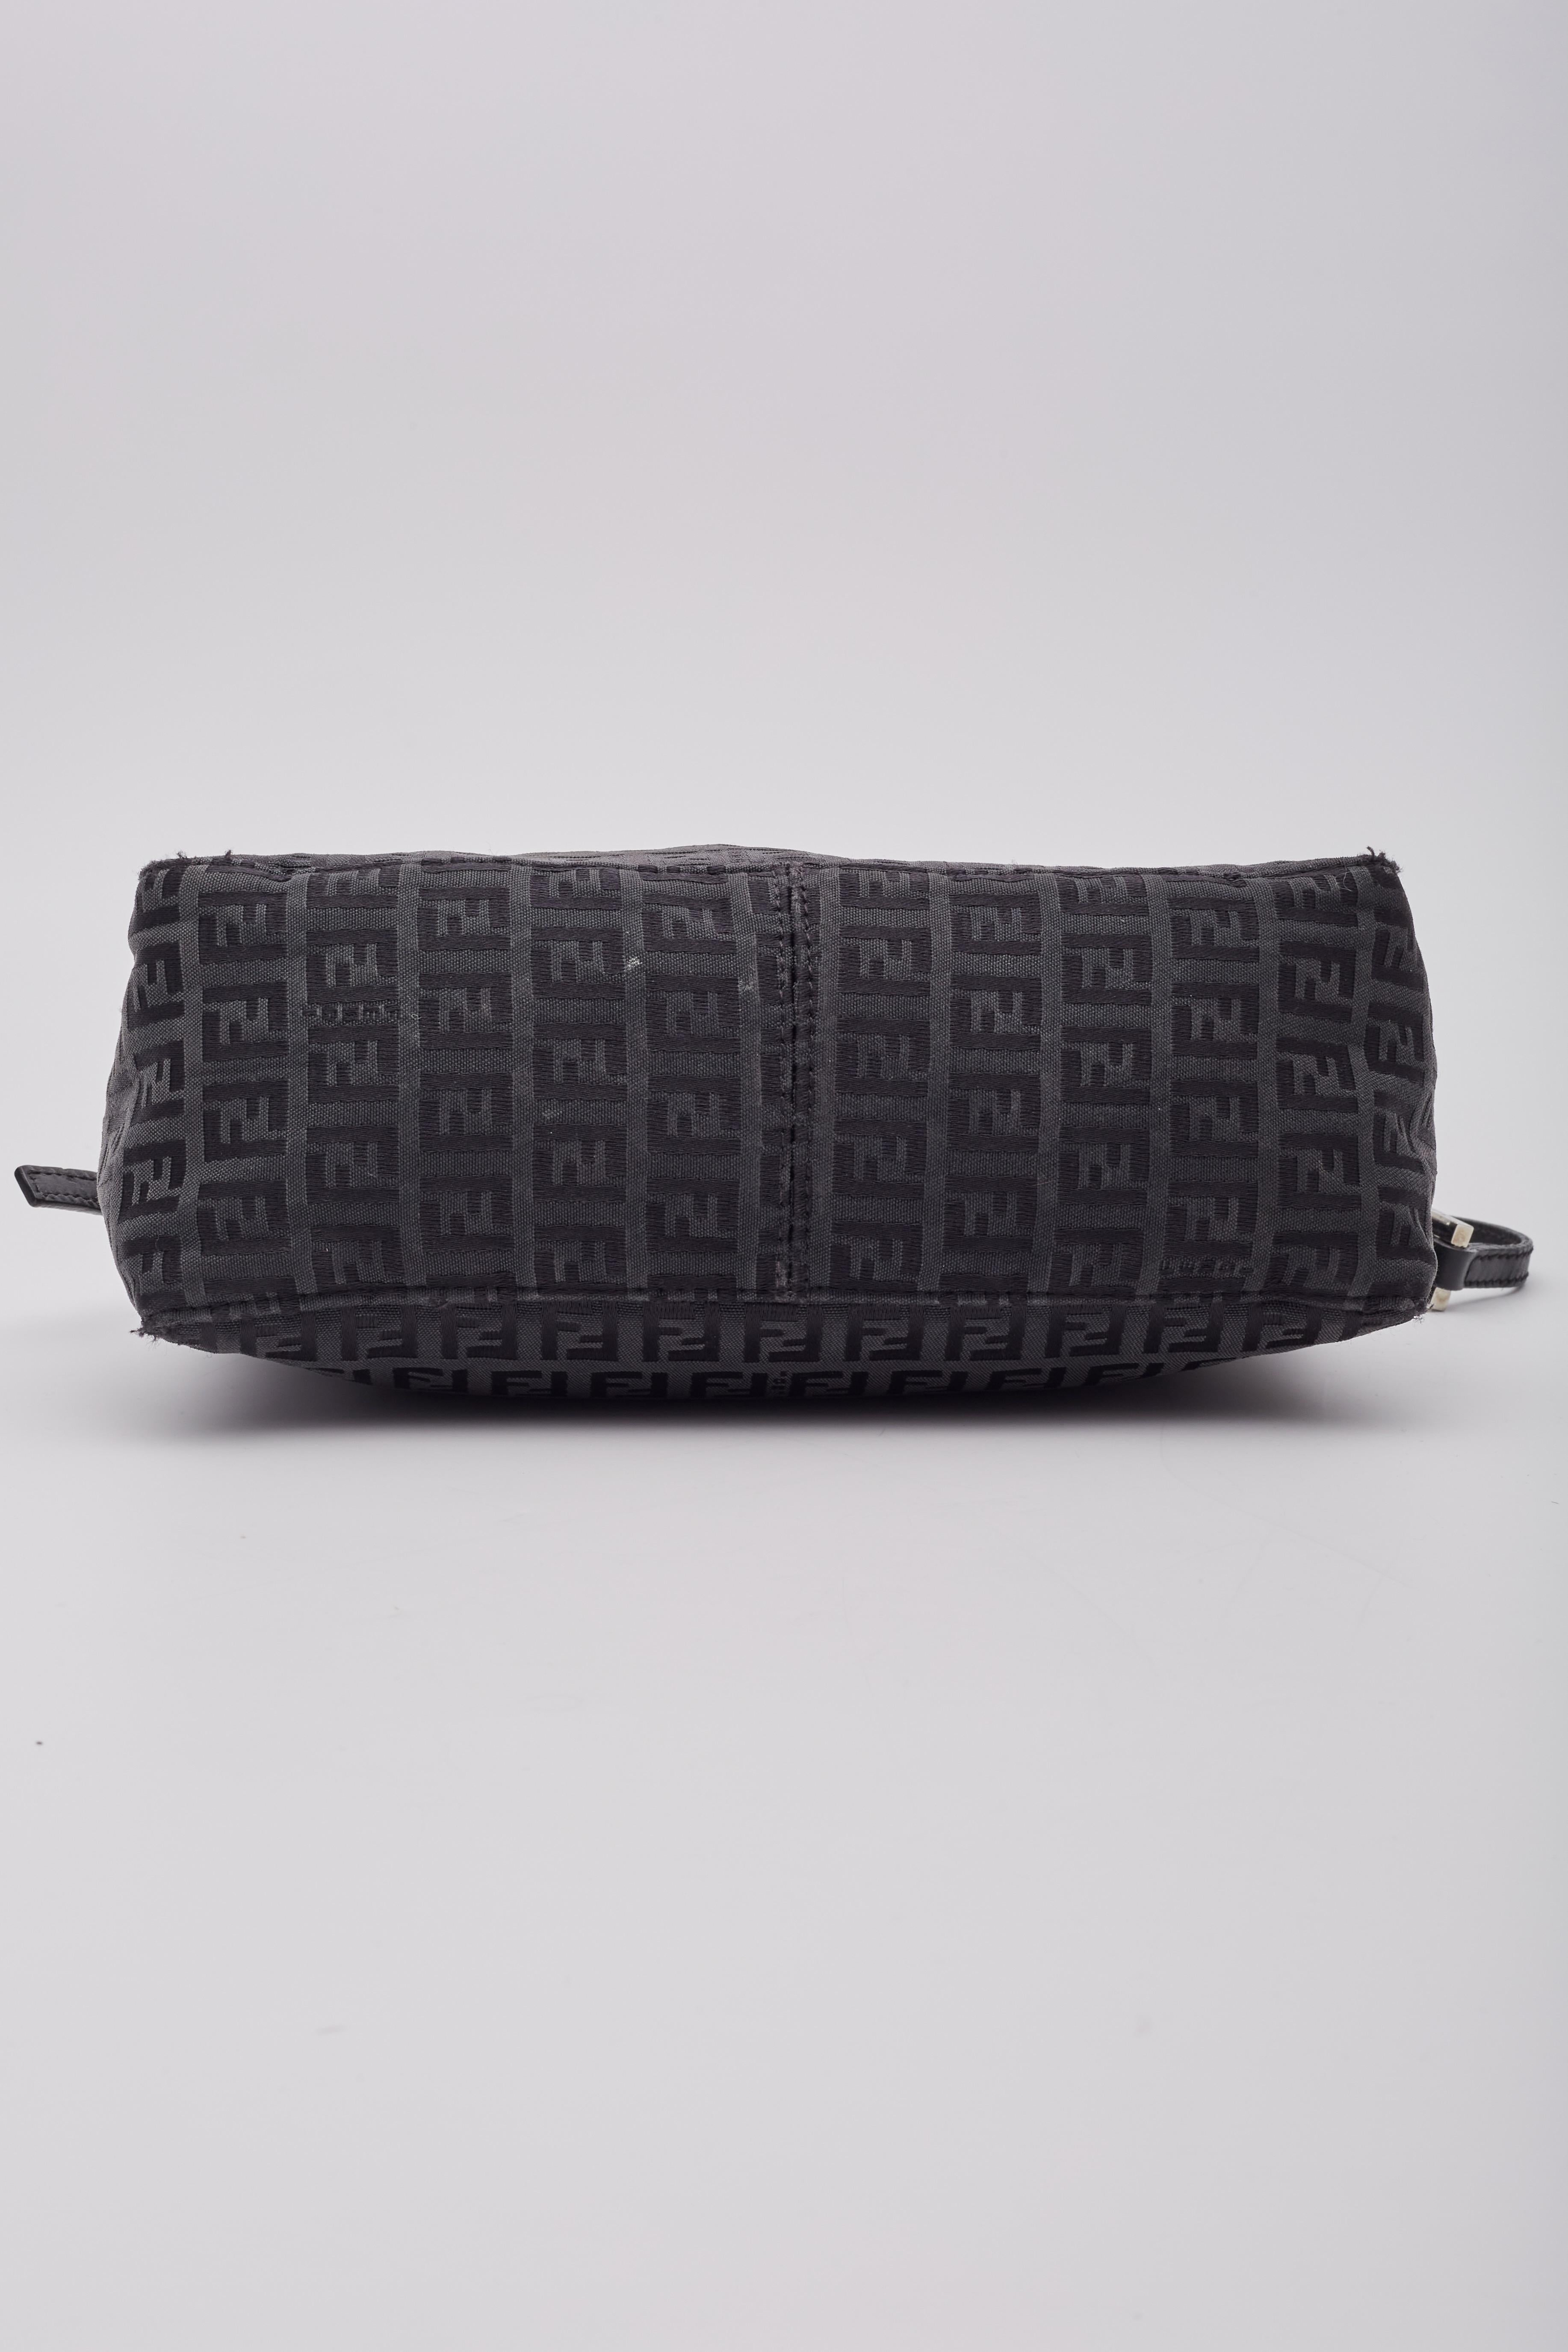 Fendi Zucca FF Print Black Canvas Shoulder Mini Bag For Sale 3